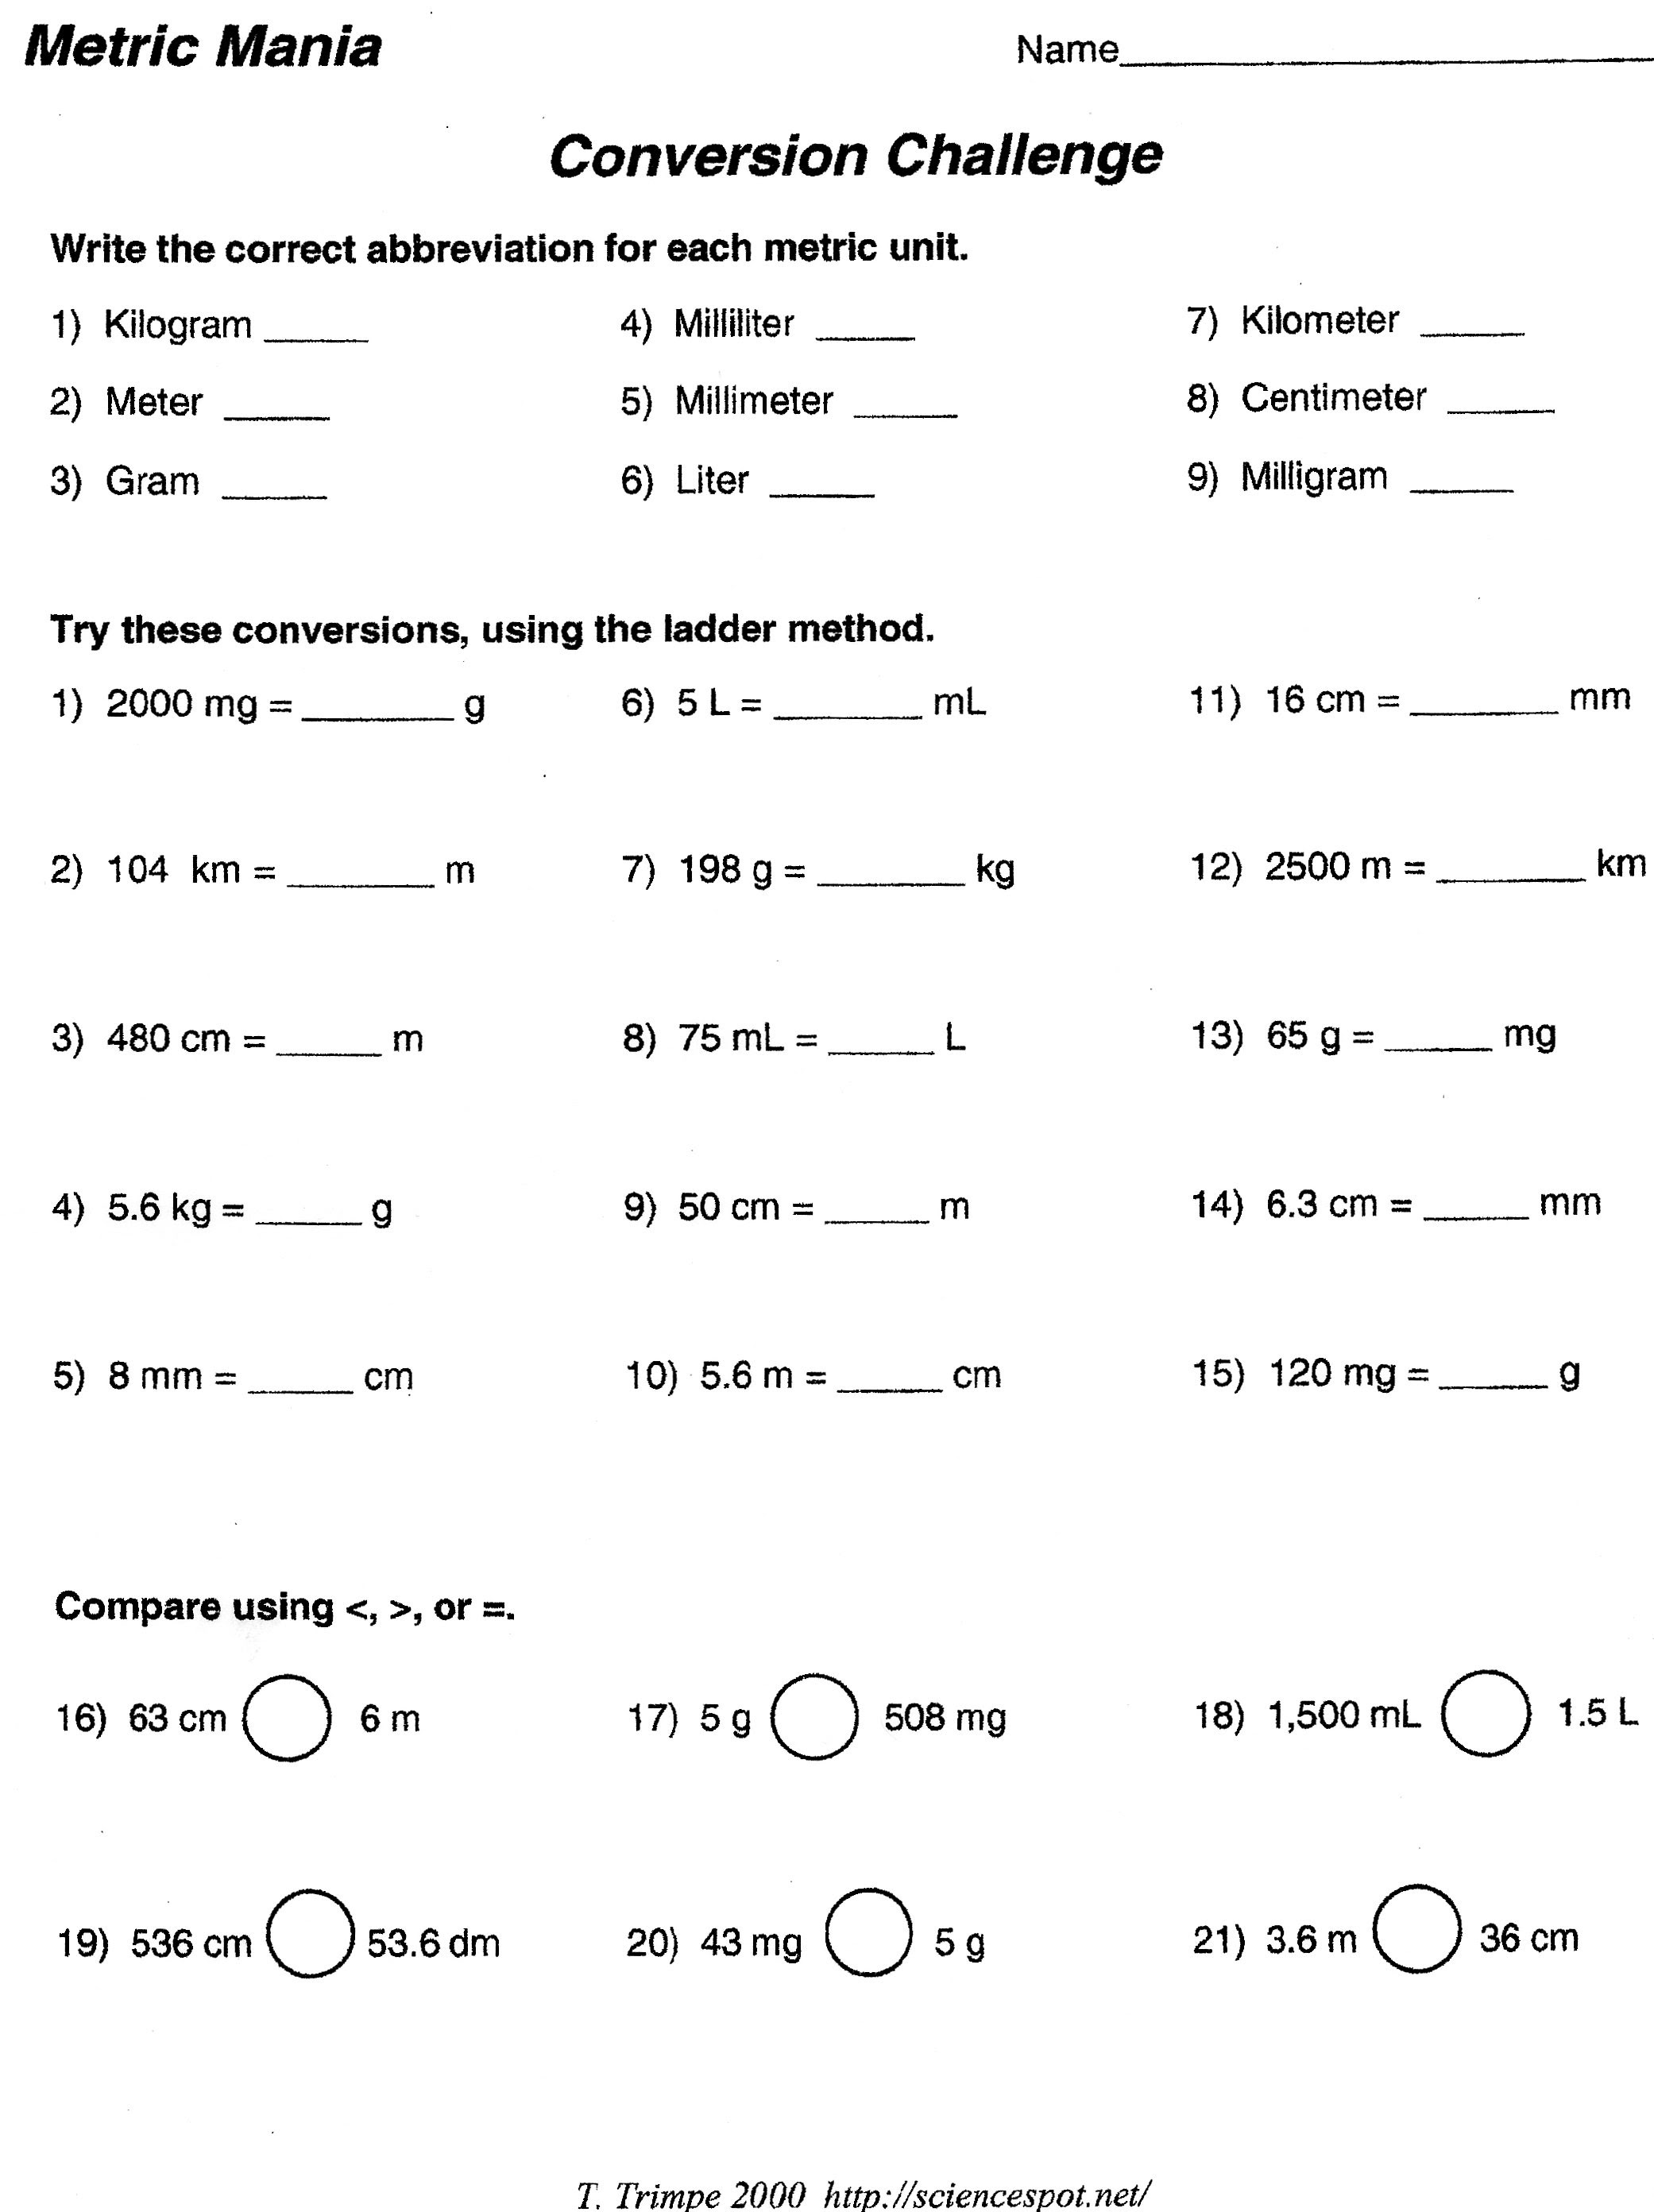 11-best-images-of-metric-conversion-worksheet-metric-conversion-table-chart-metric-system